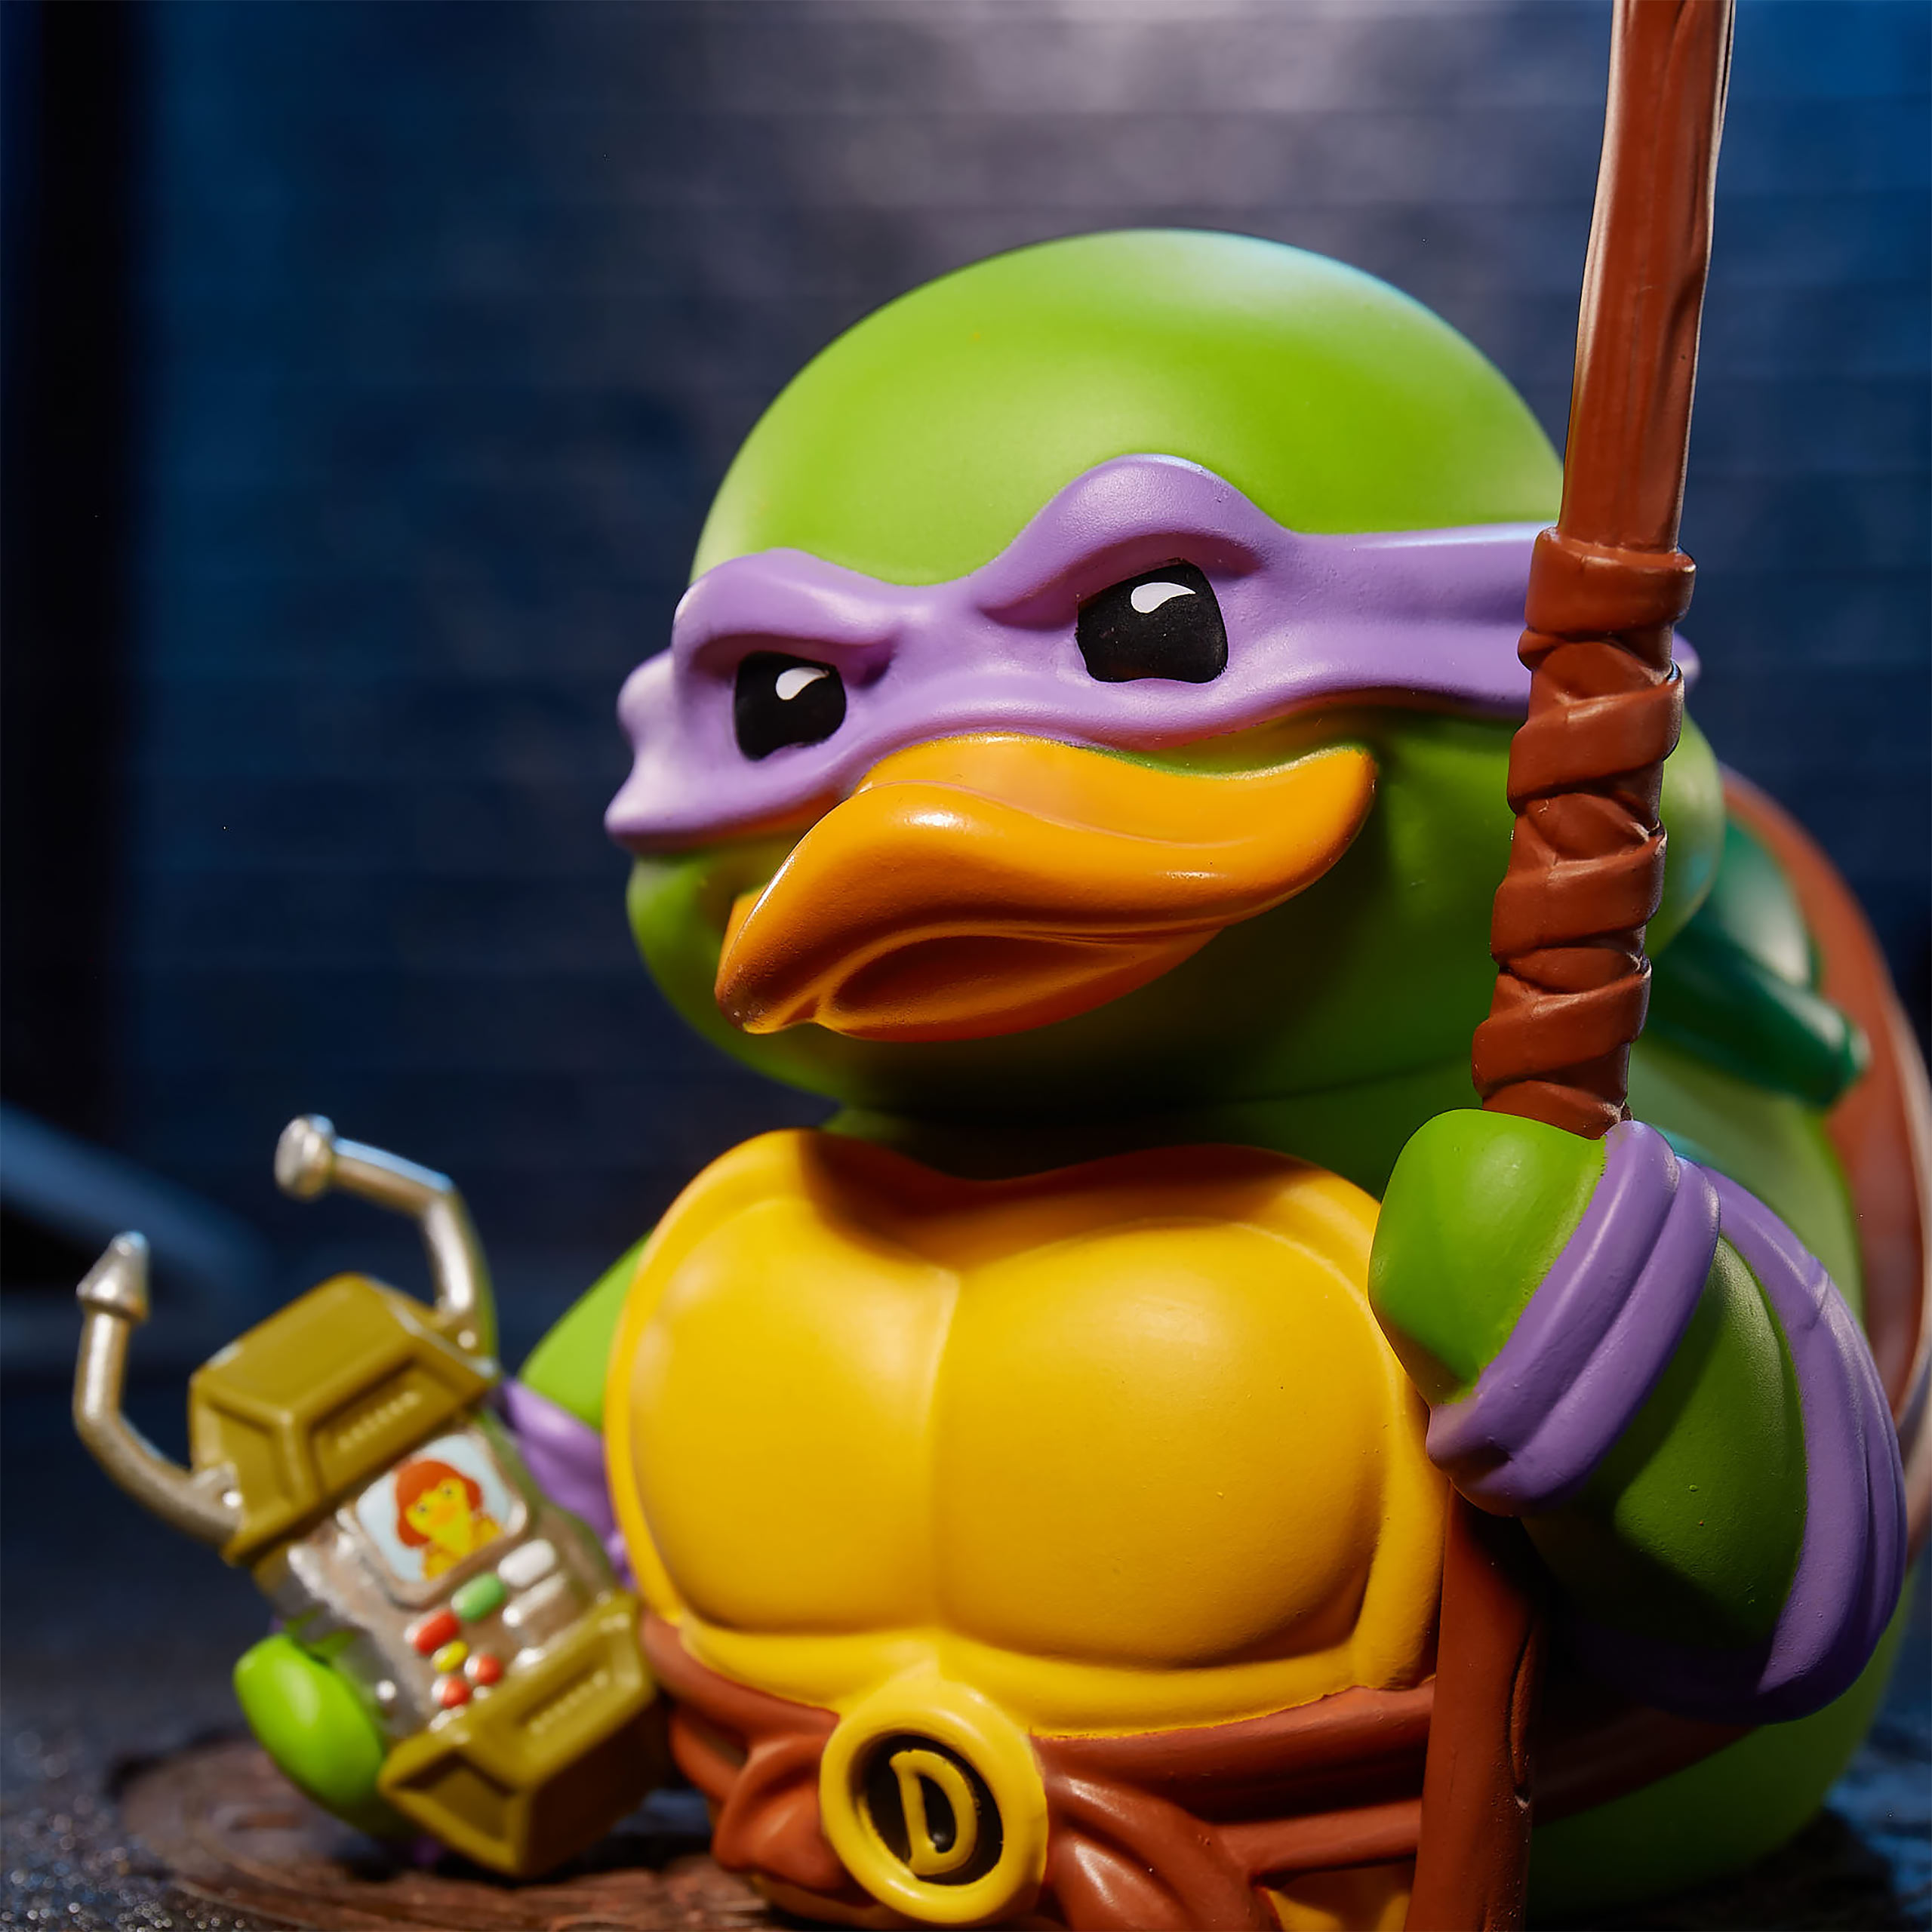 Teenage Mutant Ninja Turtles - Donatello TUBBZ Decorative Duck